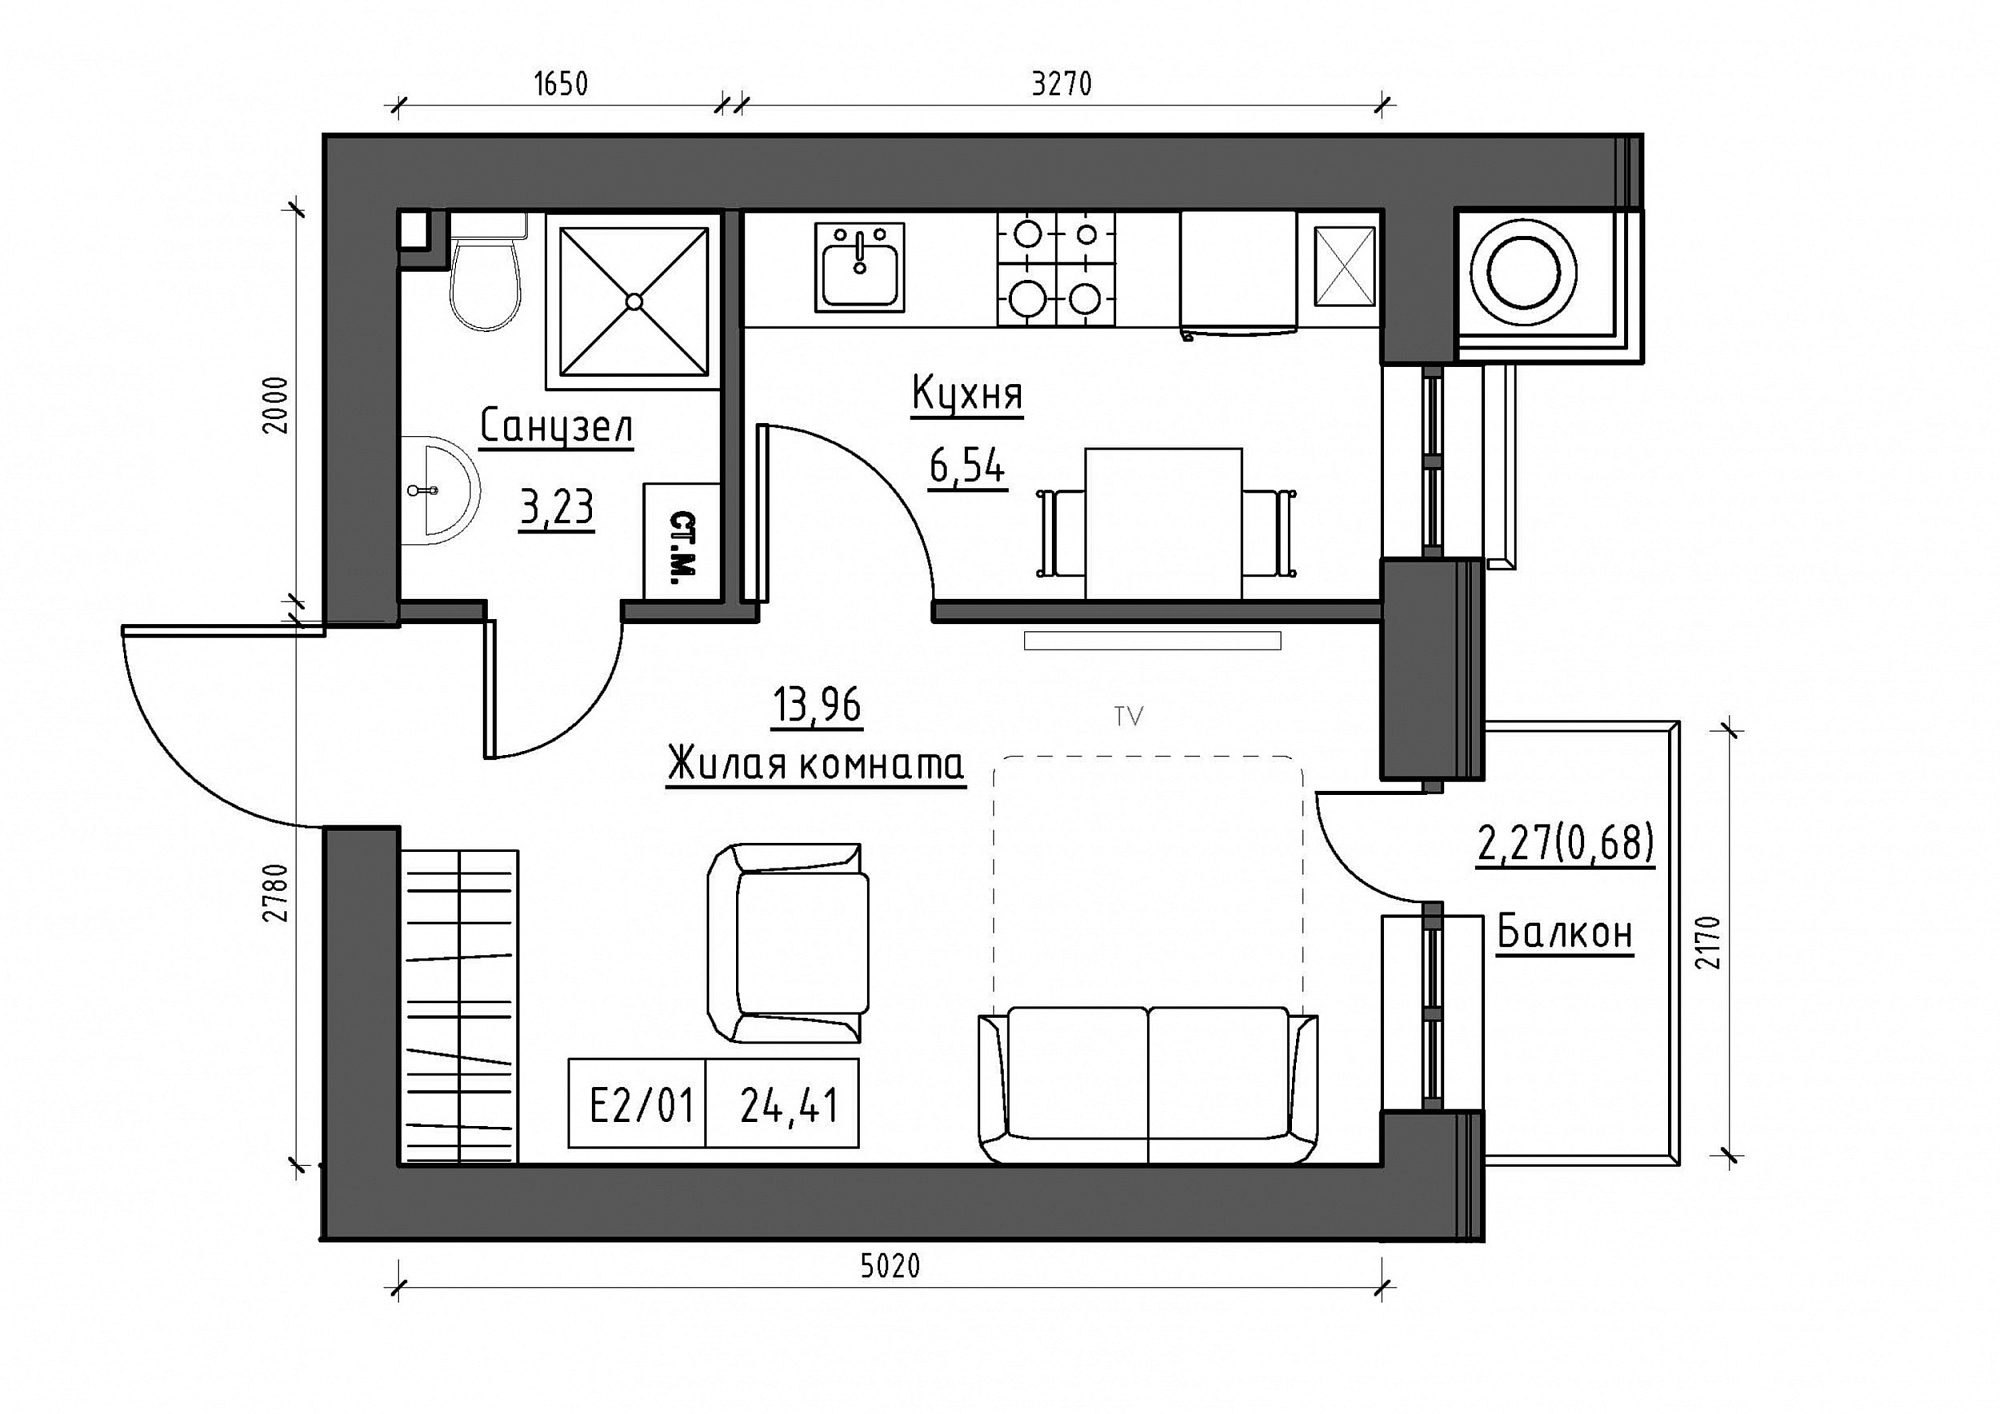 Planning 1-rm flats area 24.41m2, KS-011-04/0007.